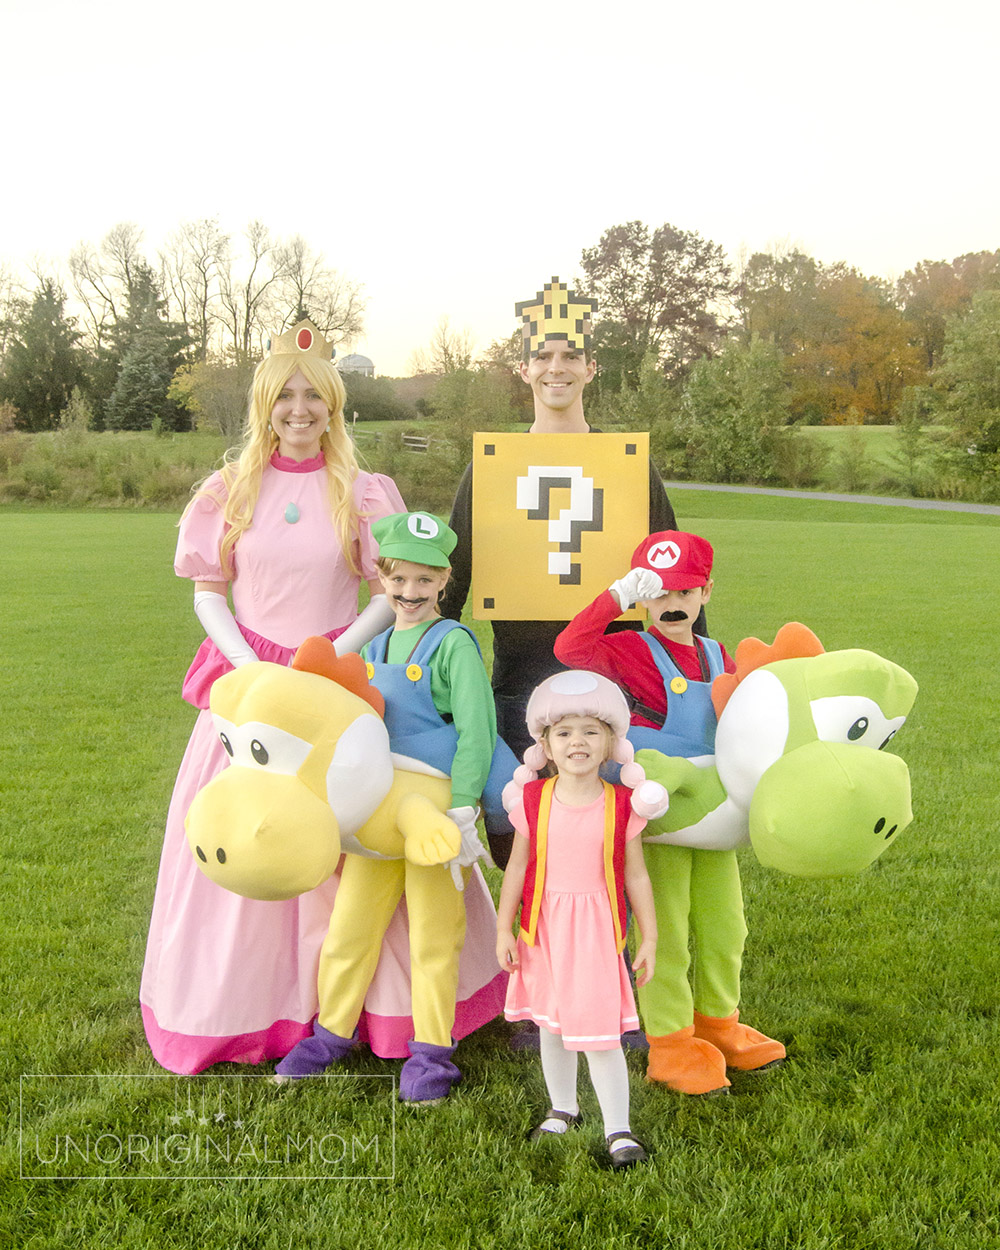 DIY Family Mario Halloween Costumes - Mario riding yoshi, toadette, princess peach, and a question mark block!